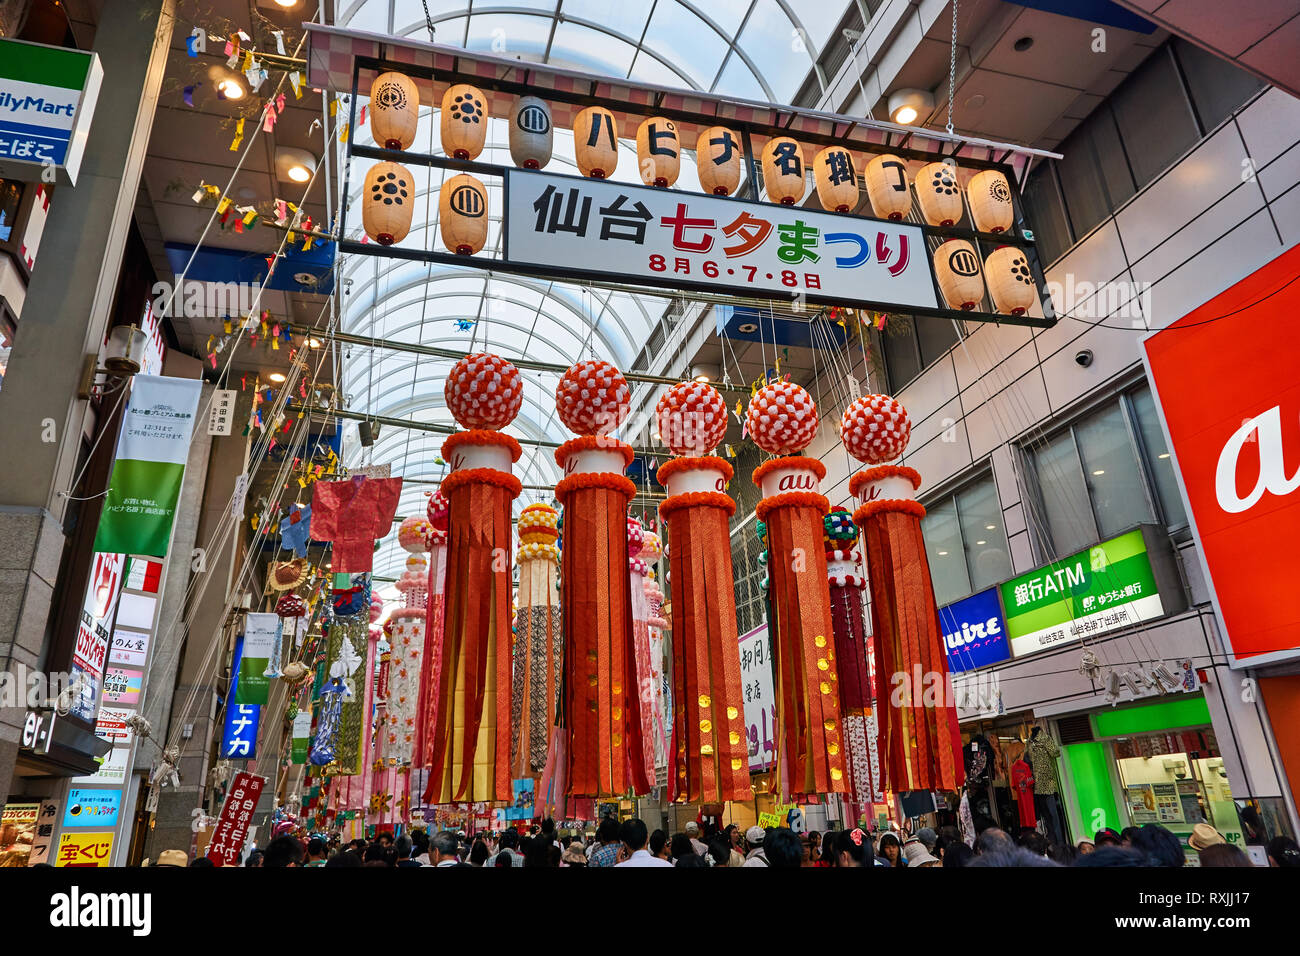 Streamers (takekazari, or fukinagashi) in a shopping arcade during Sendai's Tanabata Matsuri (Festival) in Sendai, Miyagi, Japan Stock Photo